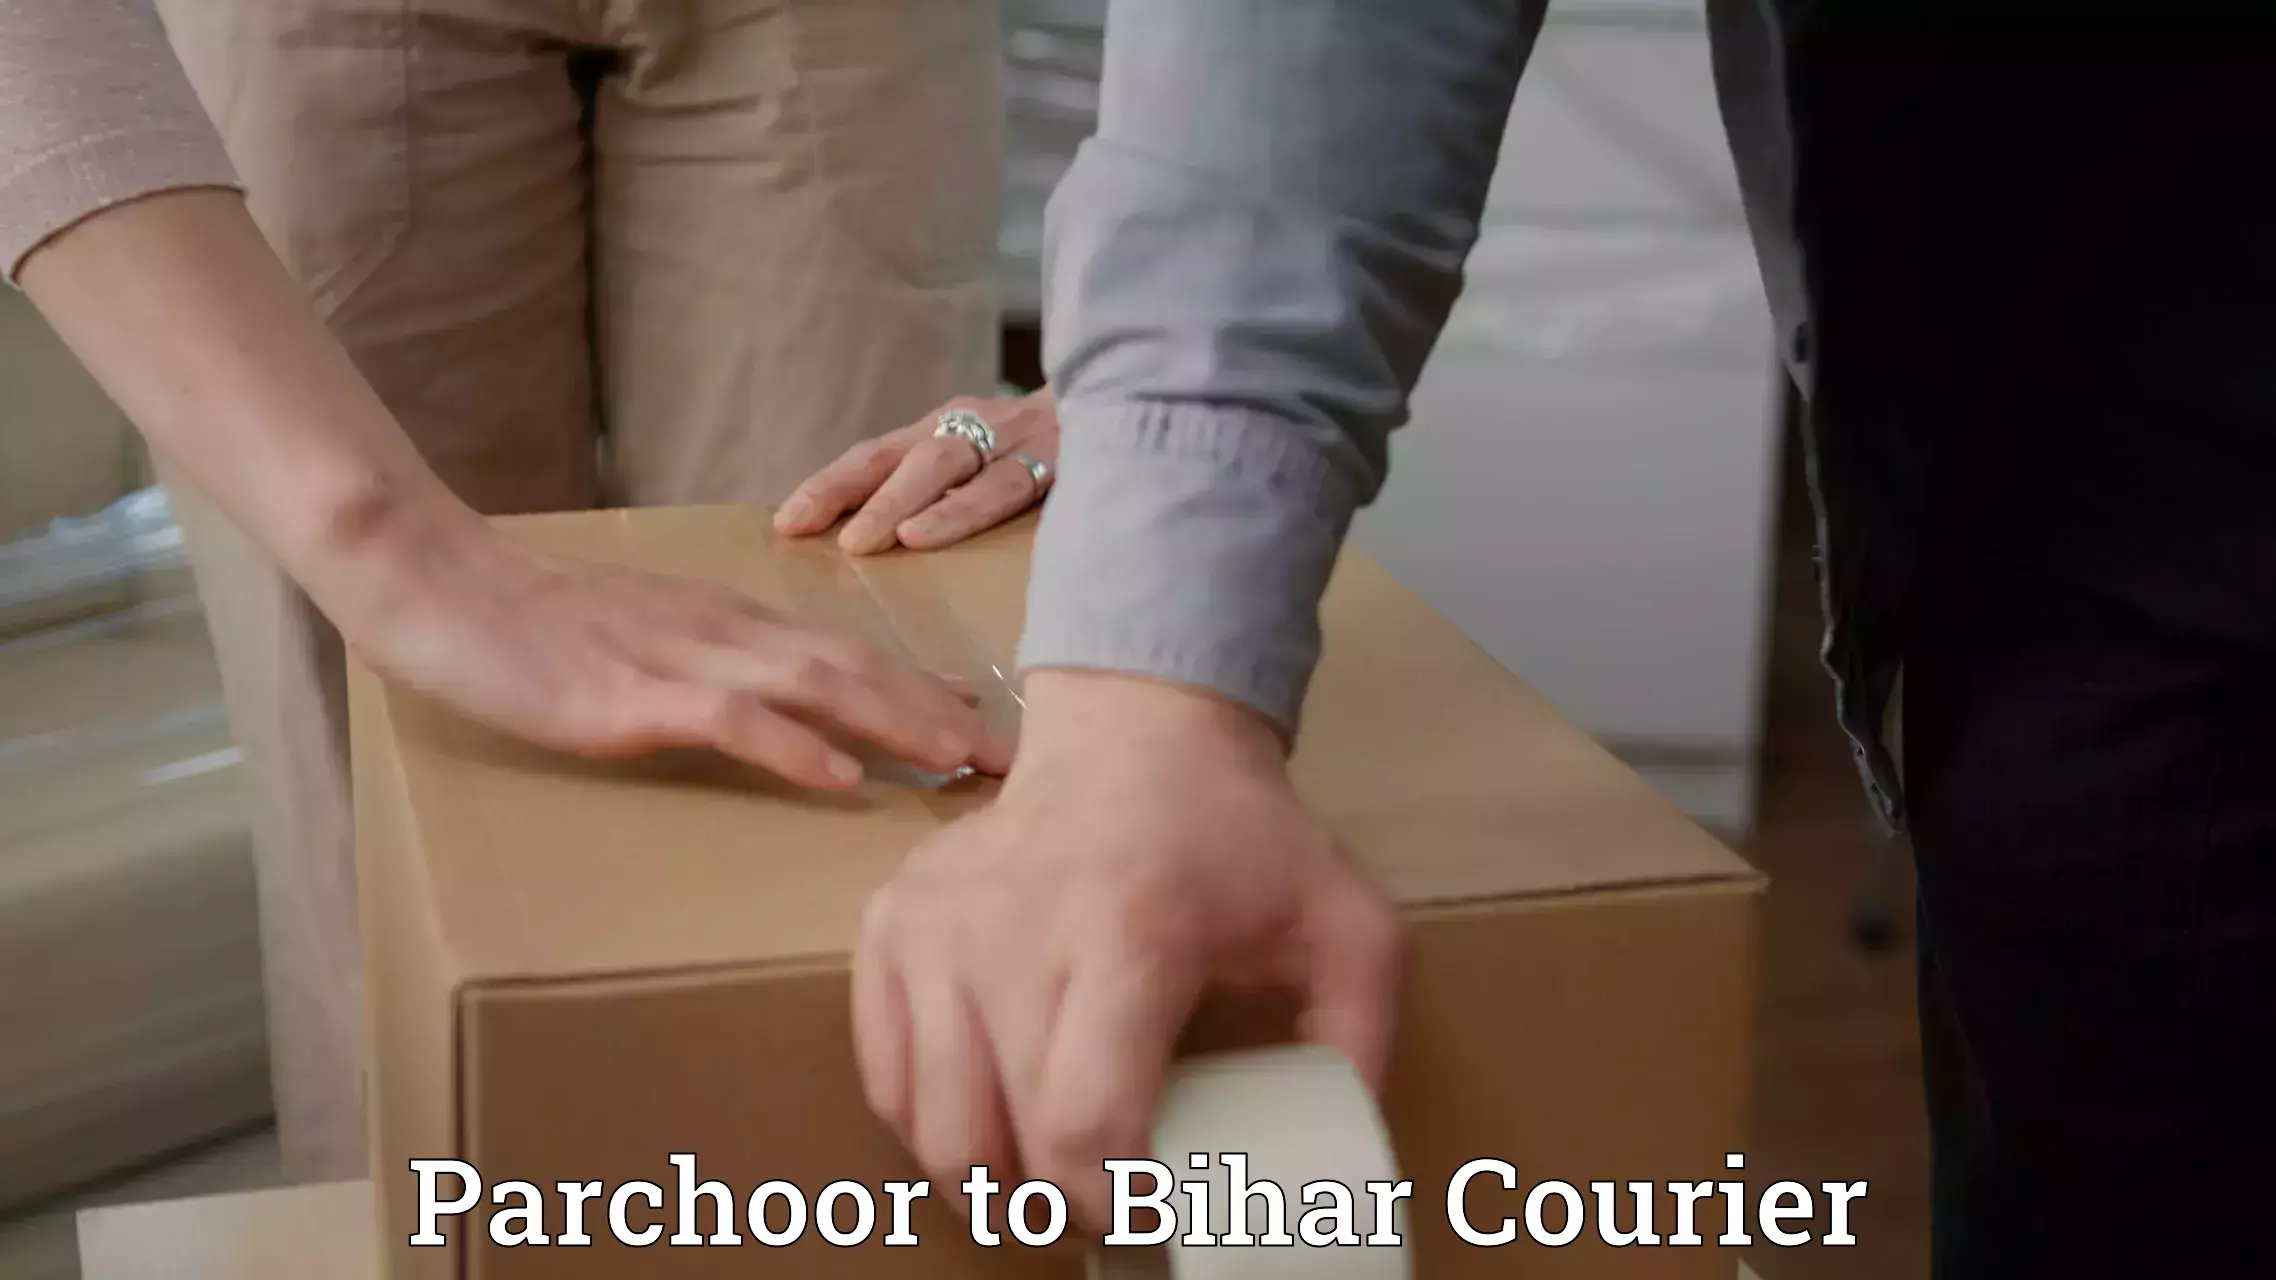 Bulk courier orders in Parchoor to Sasaram